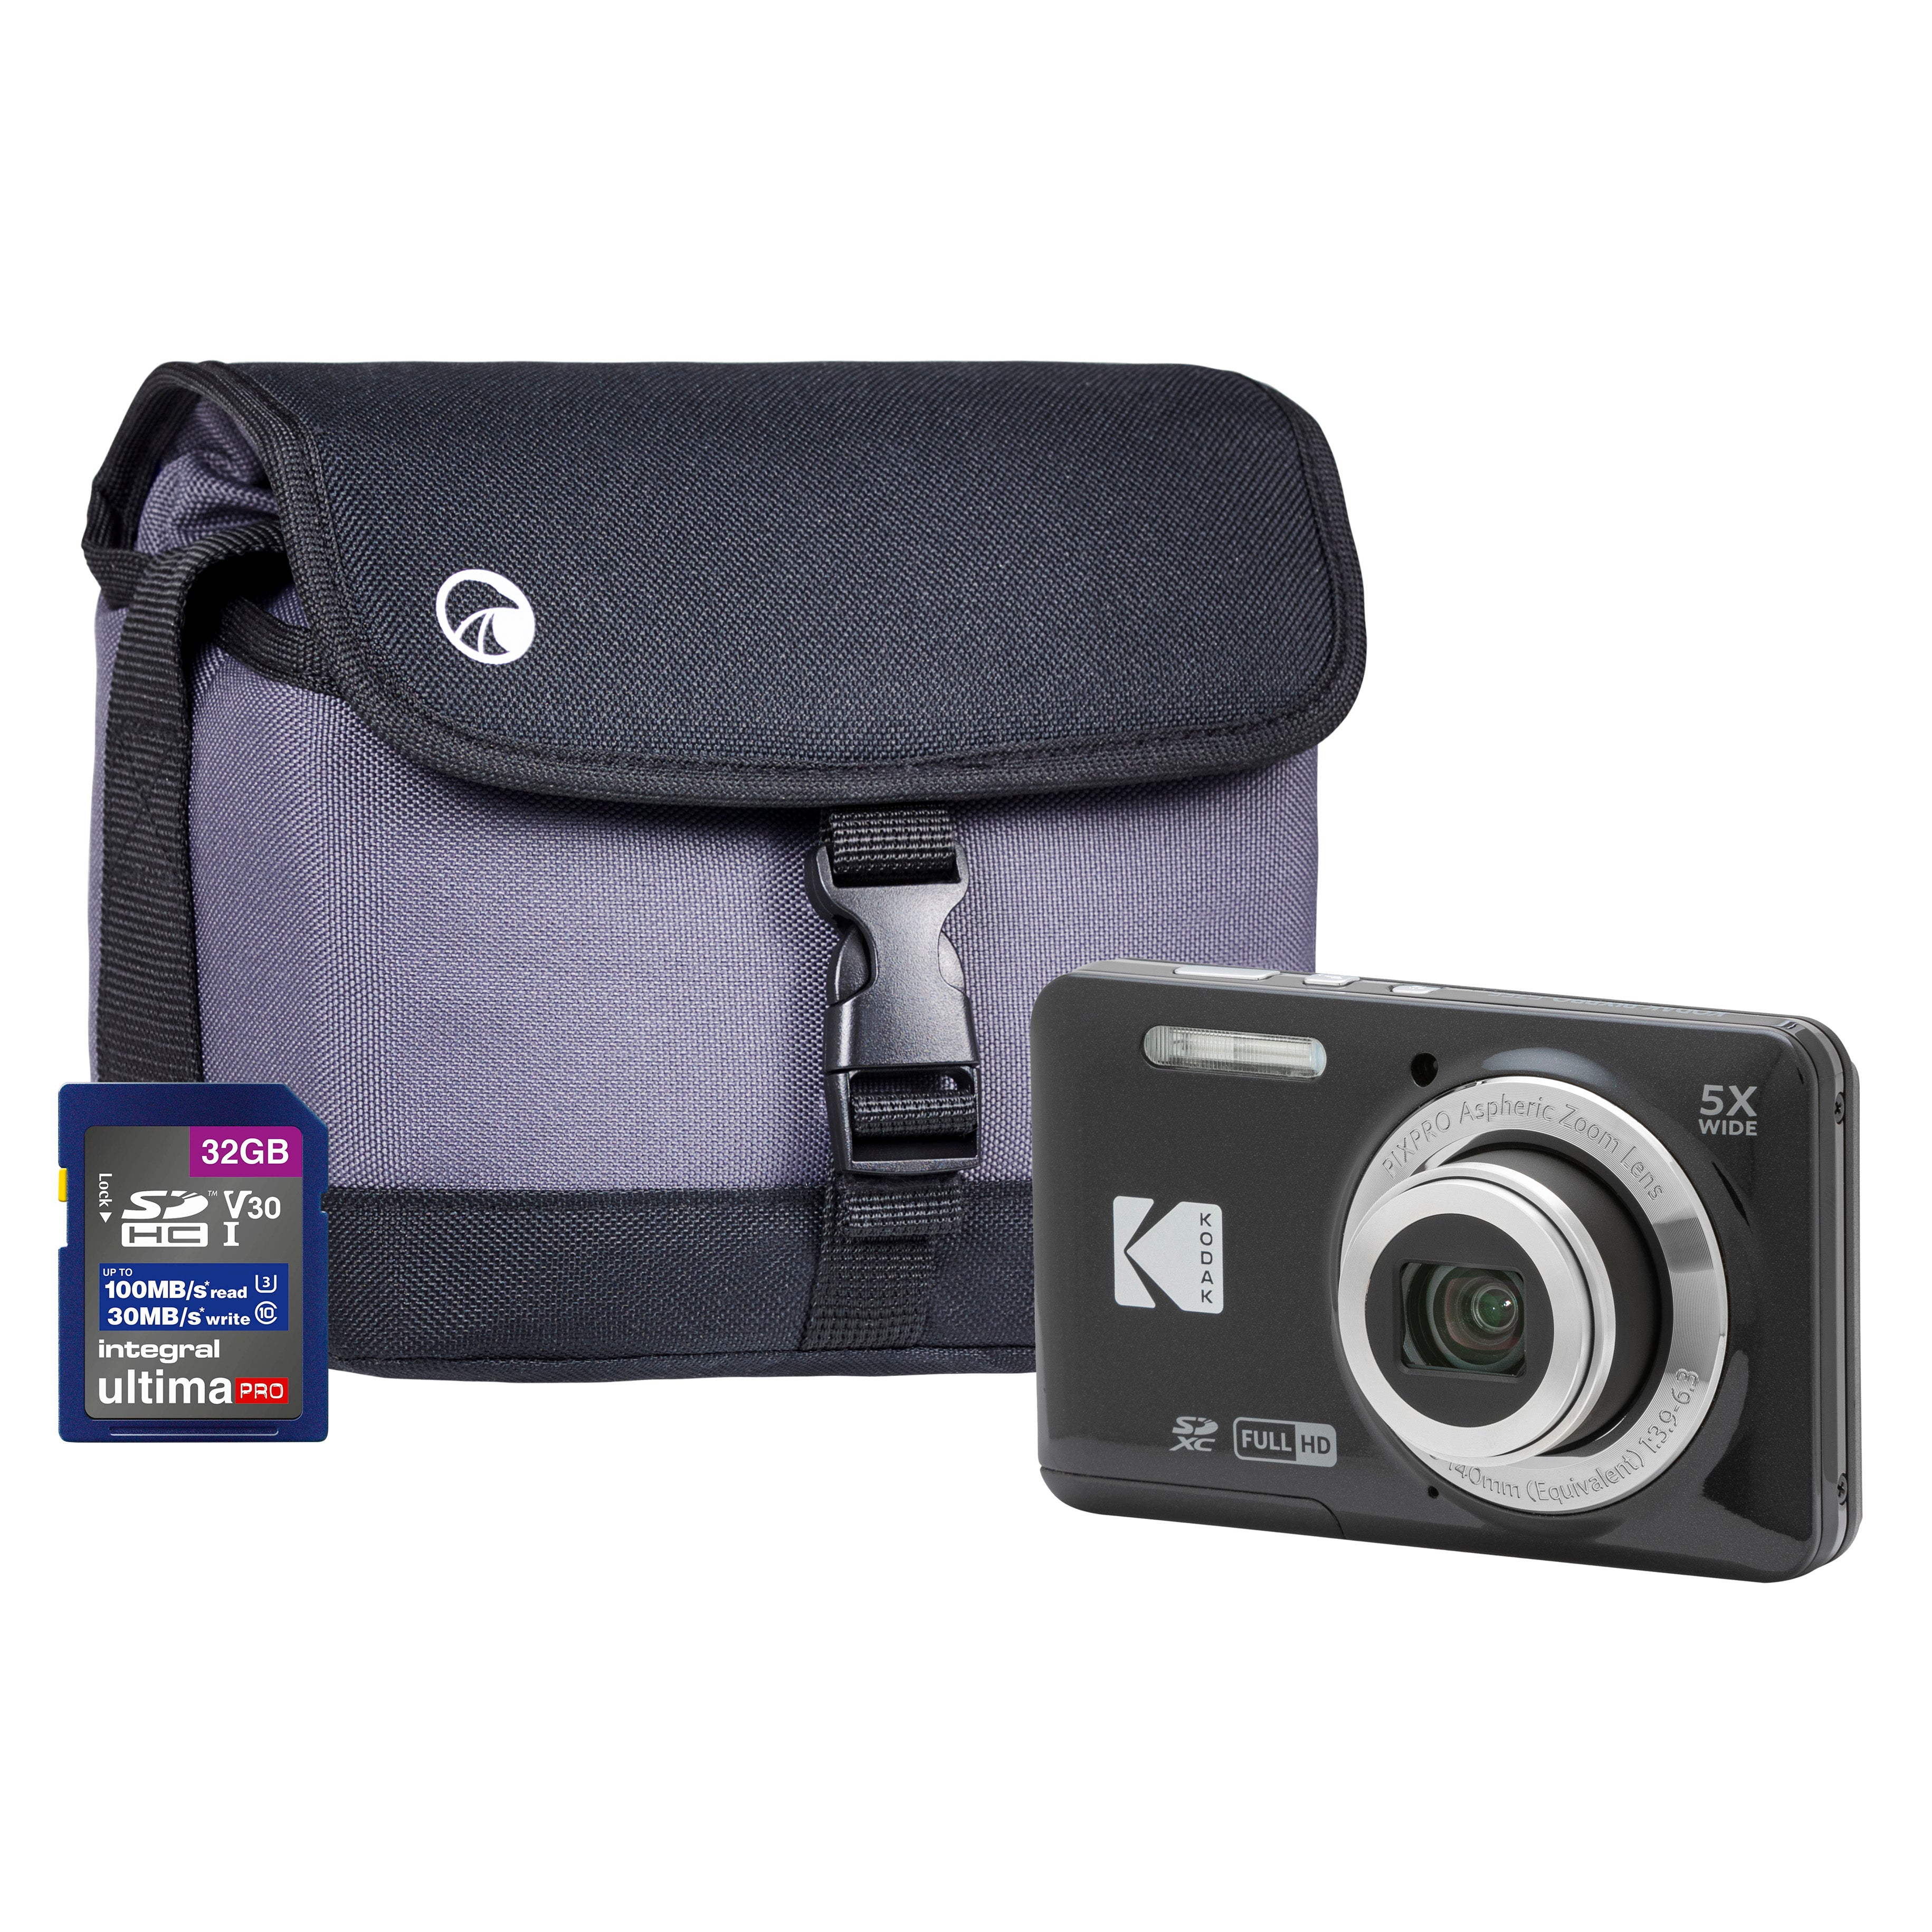 Kodak PIXPRO X55 16MP 5x Zoom Compact Camera - Black (Camera + 32GB SD Card + Case)